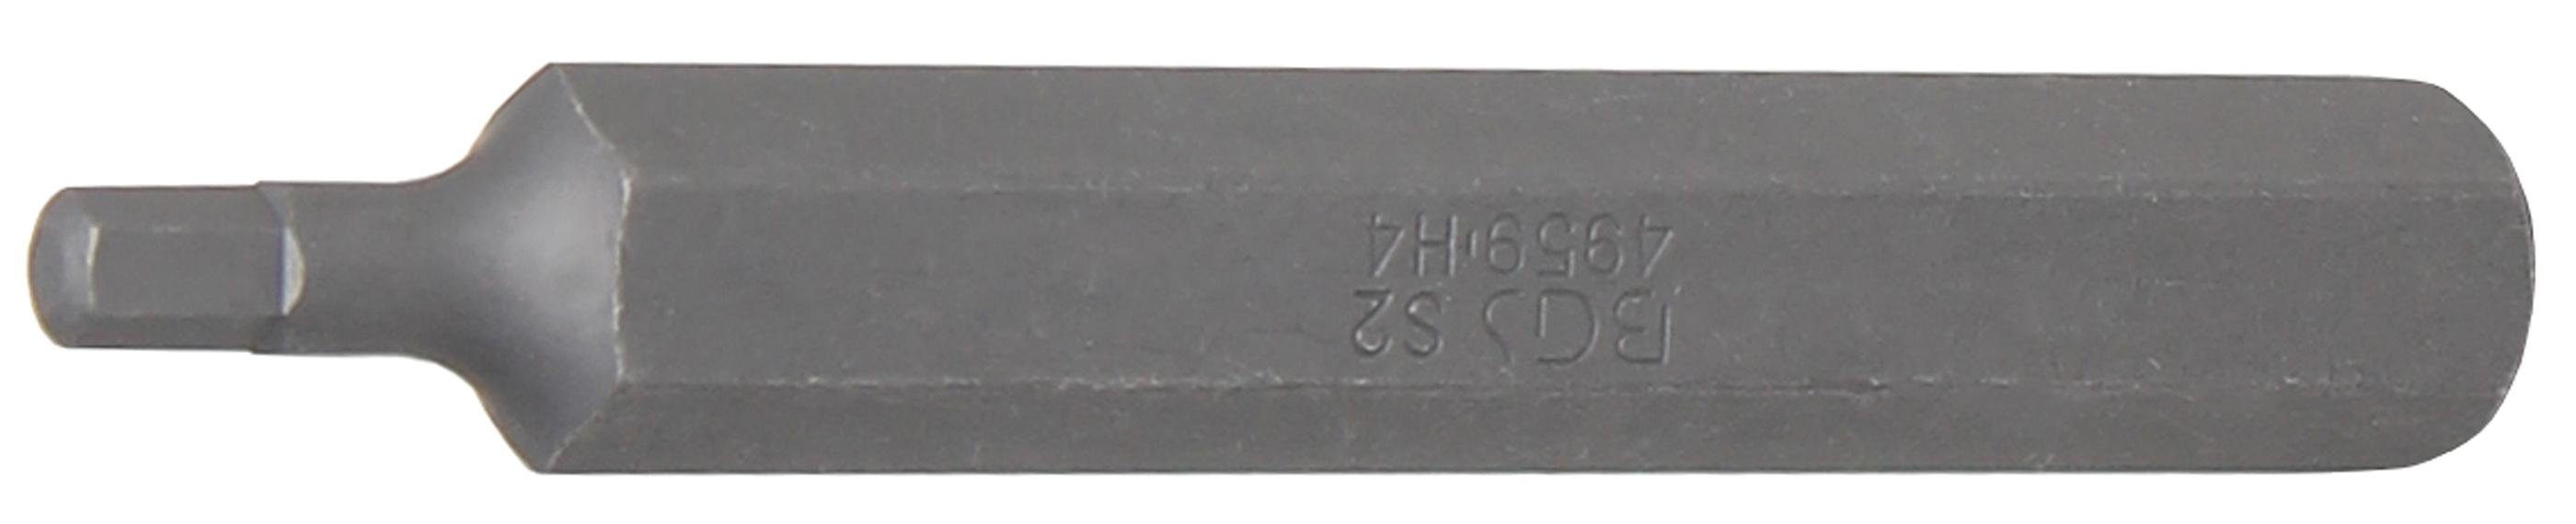 BGS technic Sechskant-Bit Bit, Länge 75 mm, Antrieb Außensechskant 10 mm (3/8), Innensechskant 4 mm